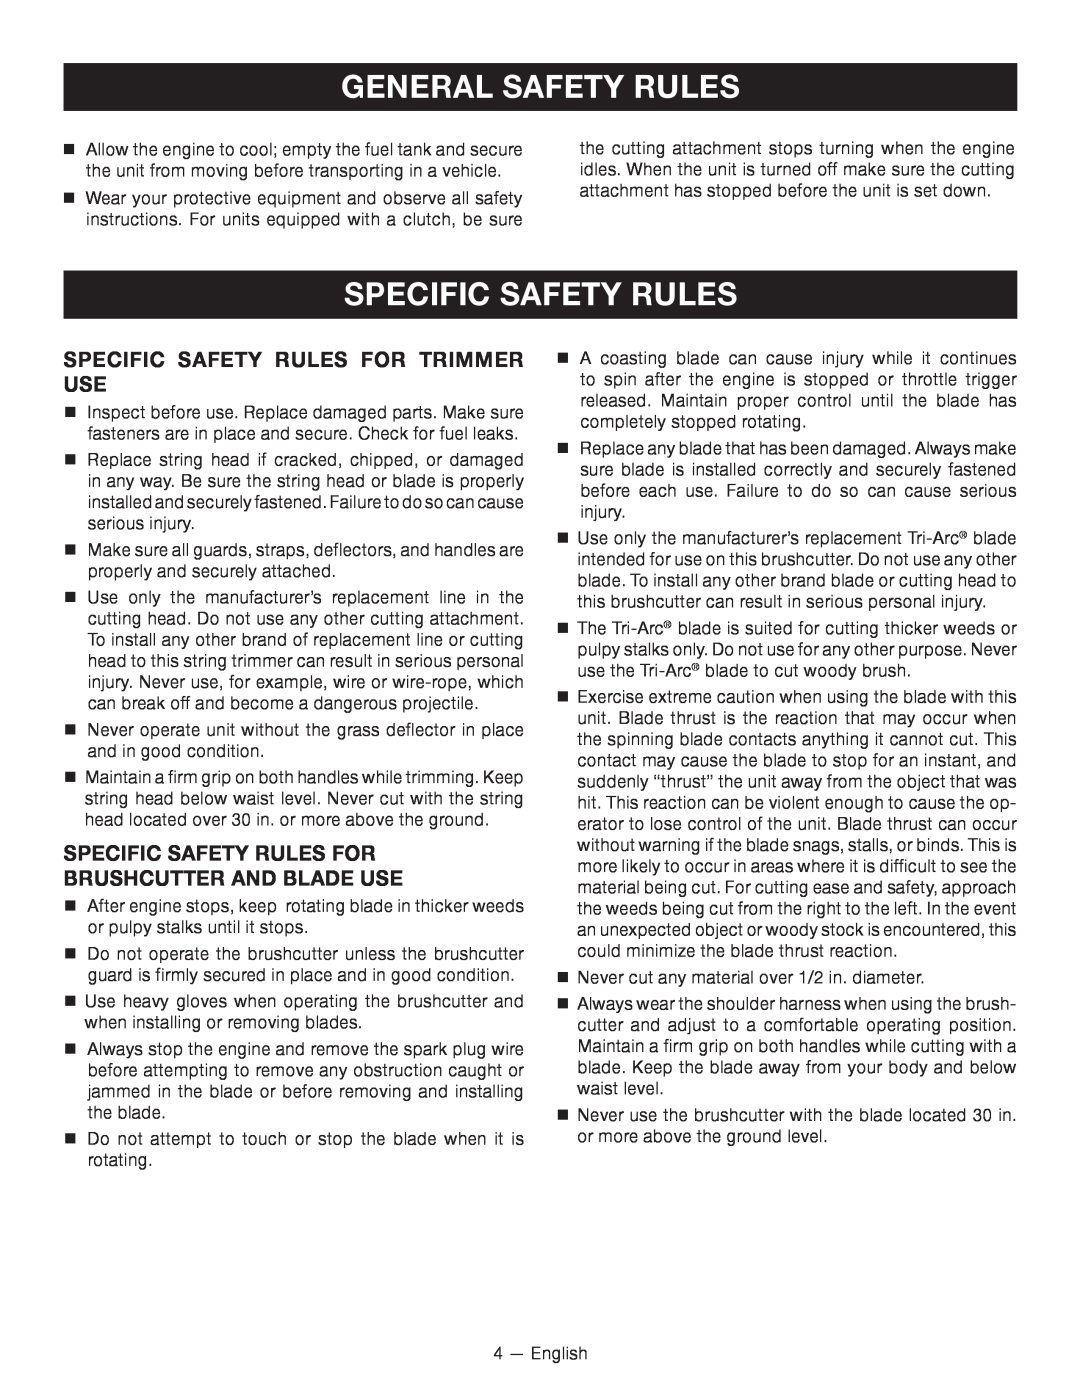 Ryobi CS26, RY26901, RY26500 Specific Safety Rules, specific safety rules for trimmer use, General Safety Rules 